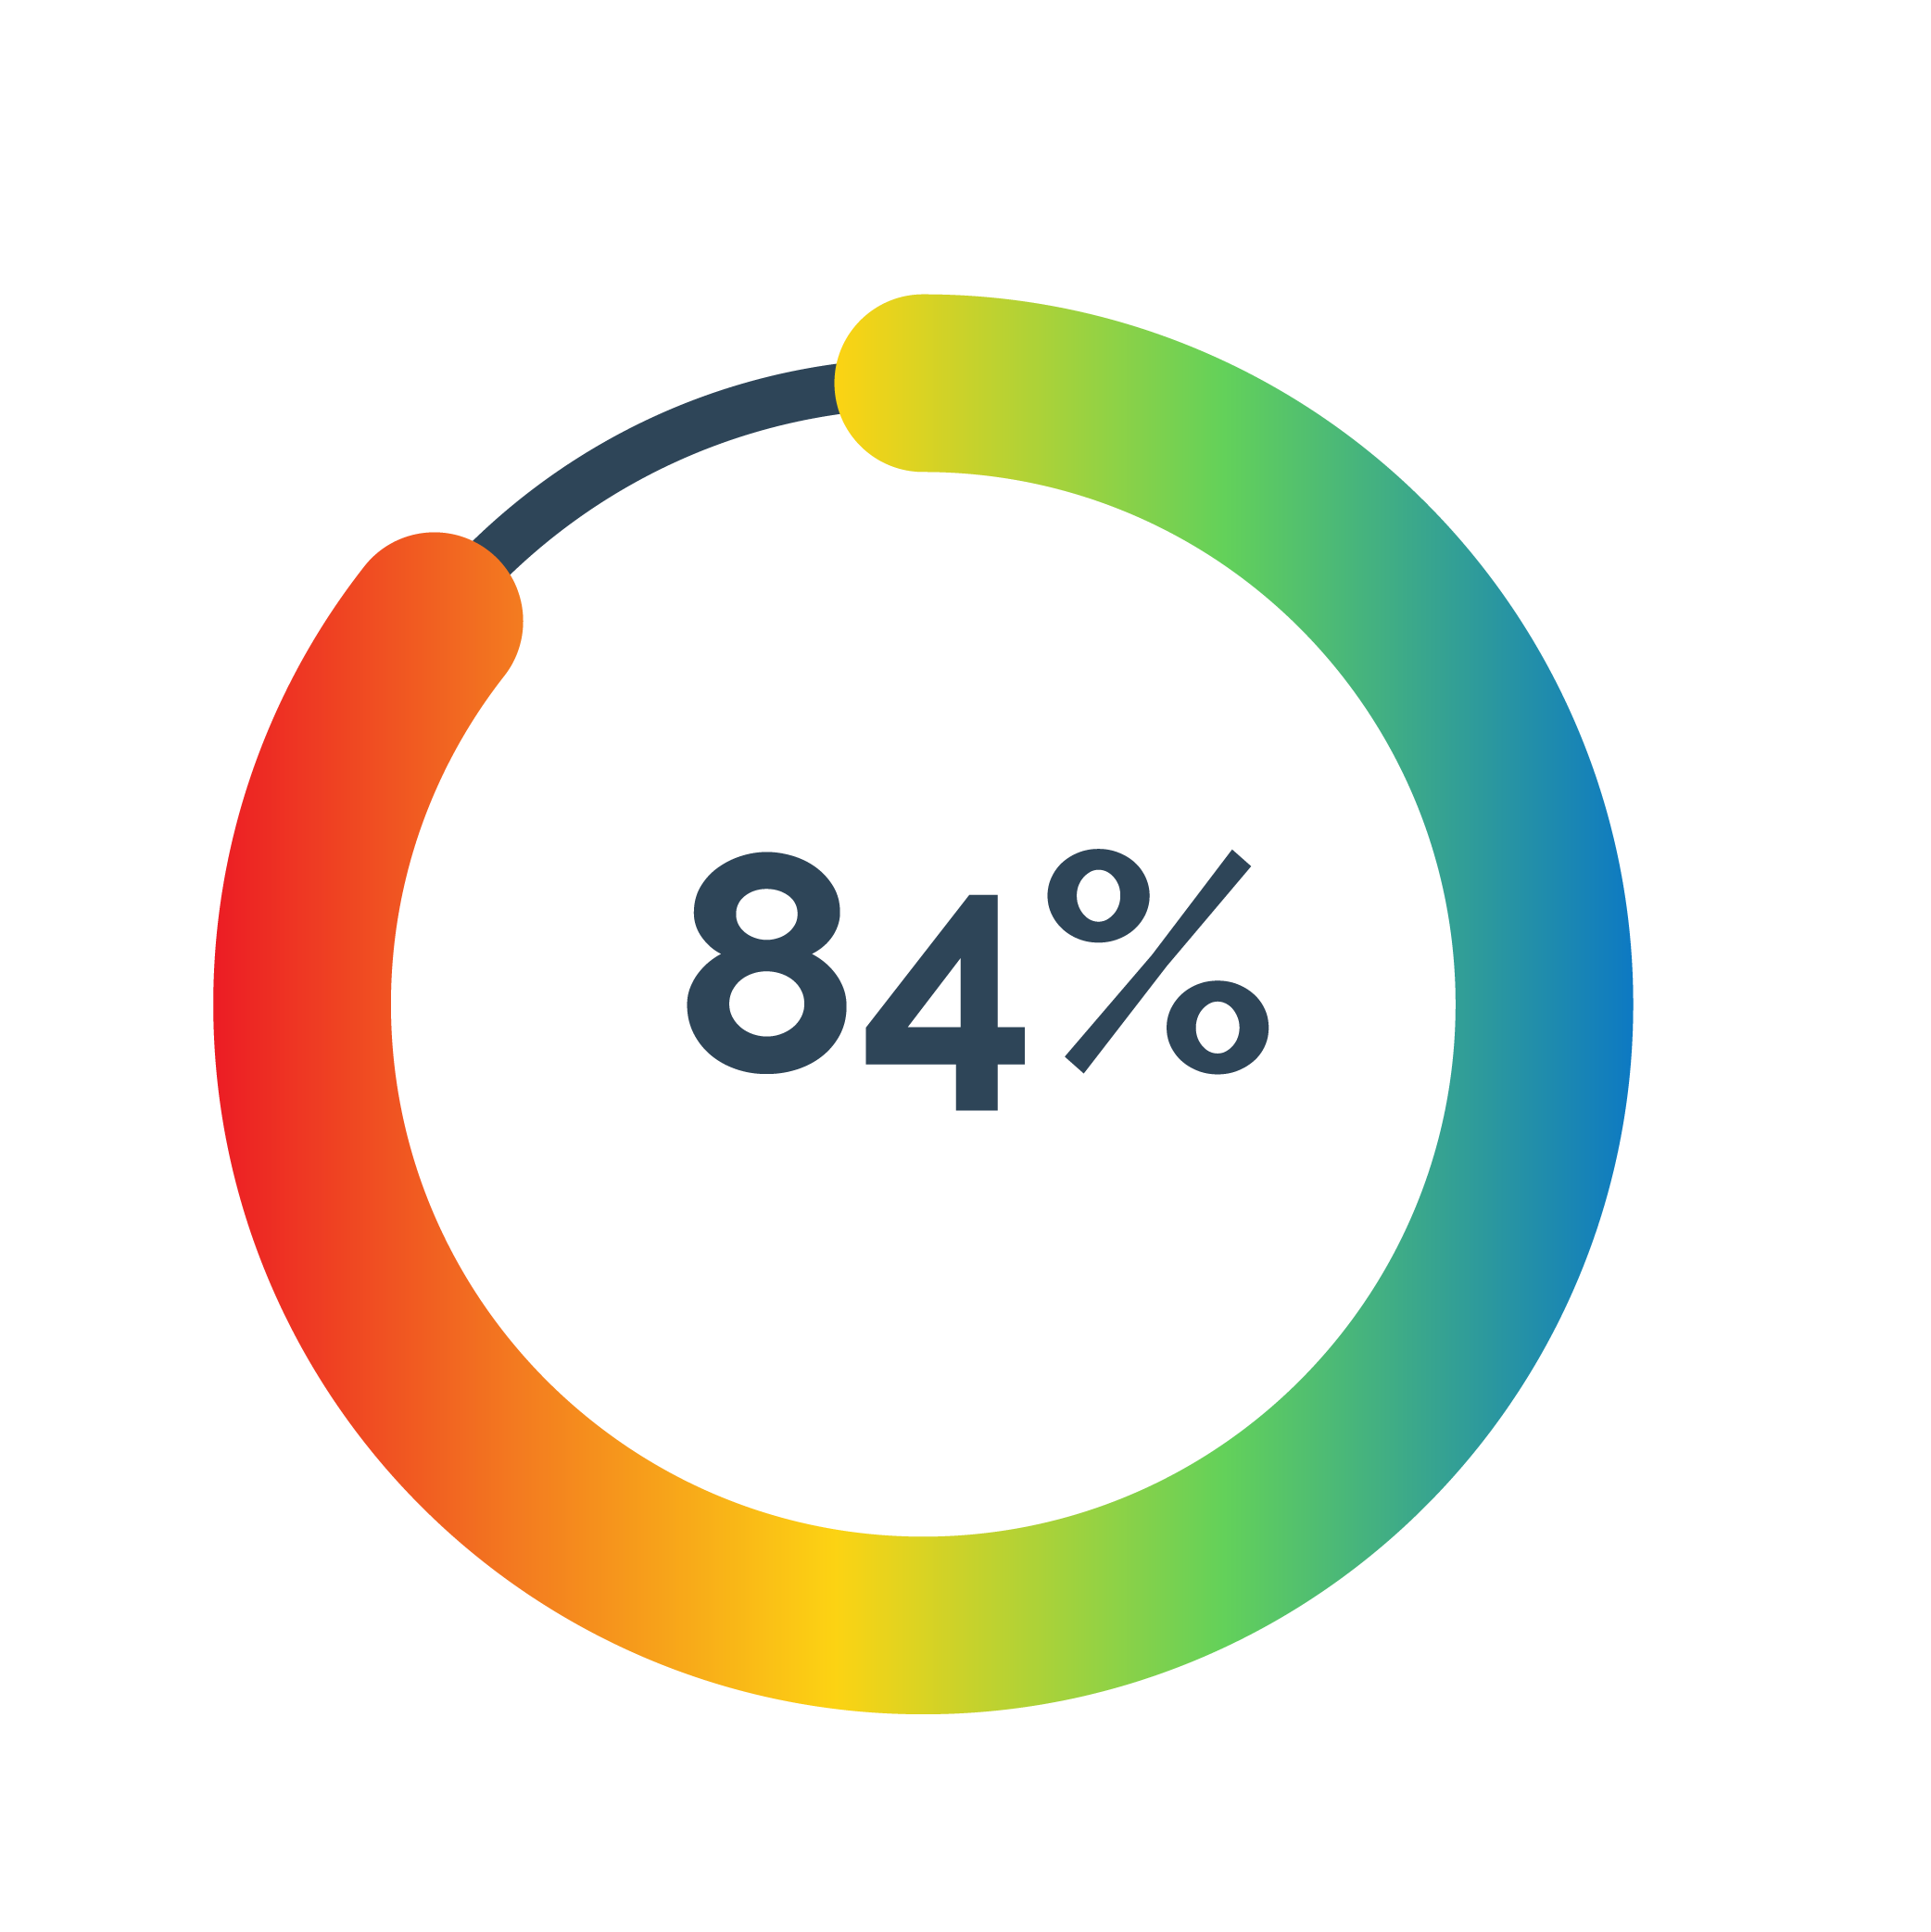 LGBTQ infographic 84%